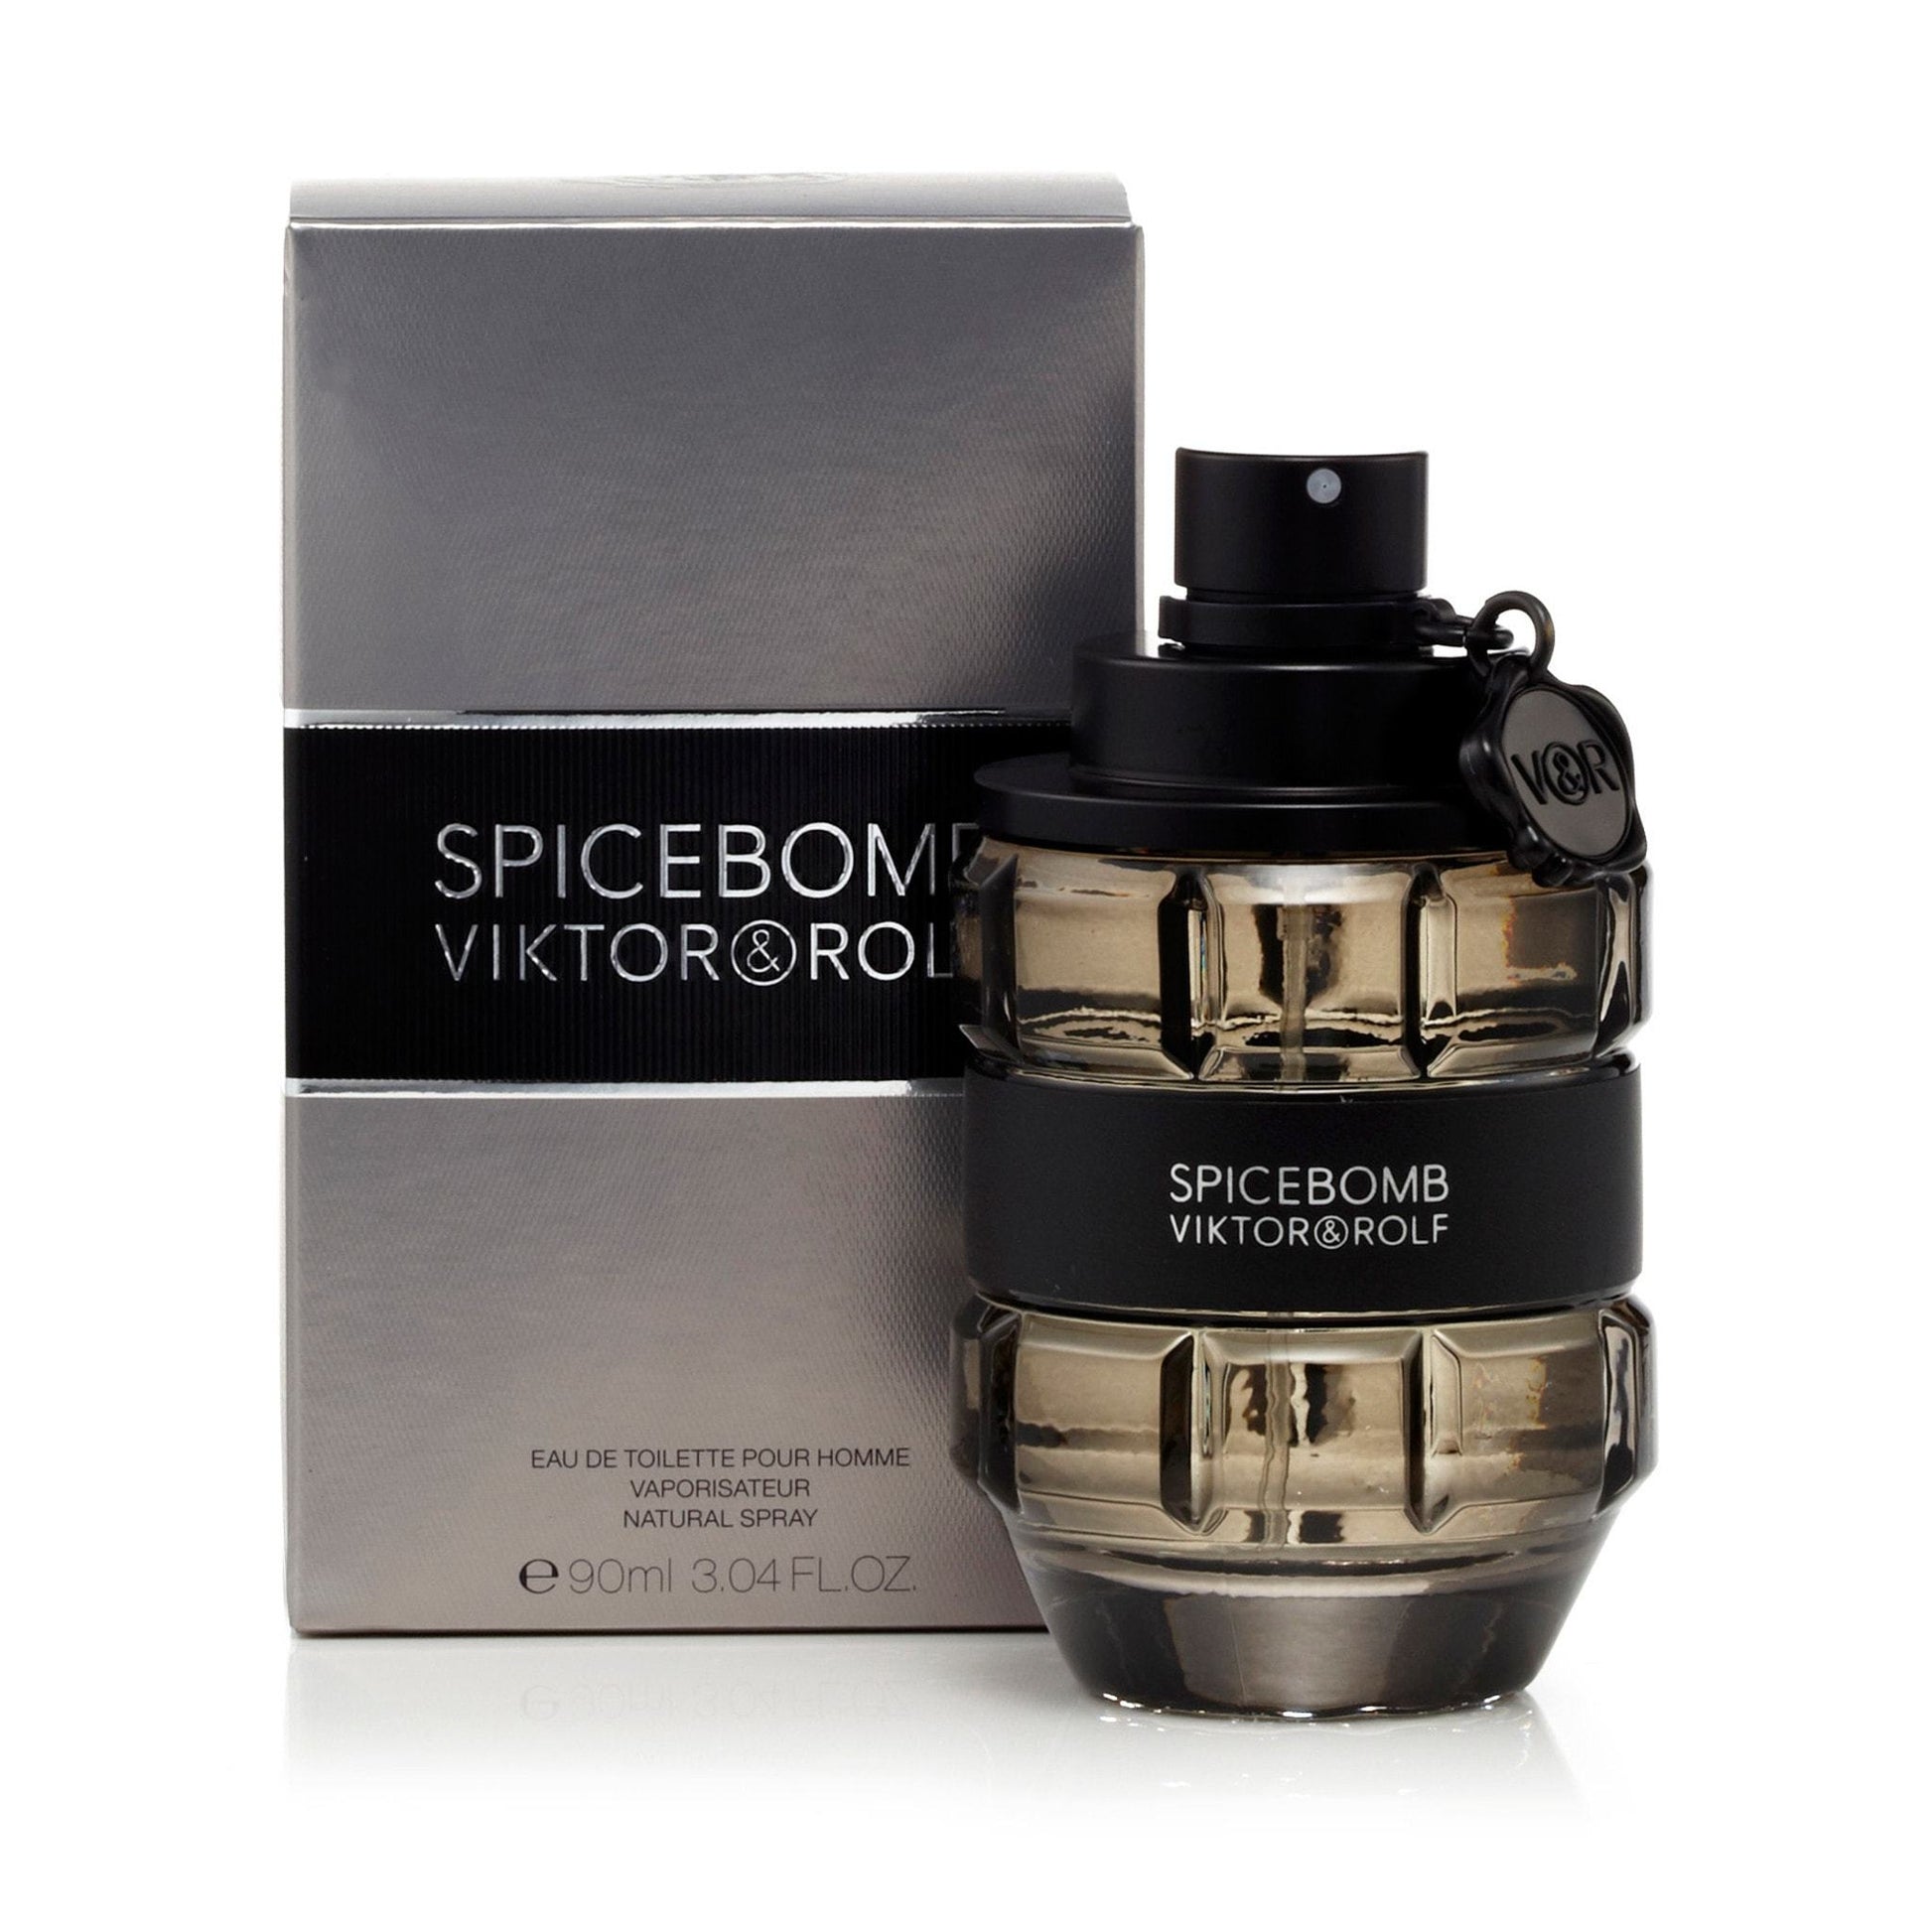 Spicebomb Eau de Toilette Spray for Men by Viktor & Rolf, Product image 1